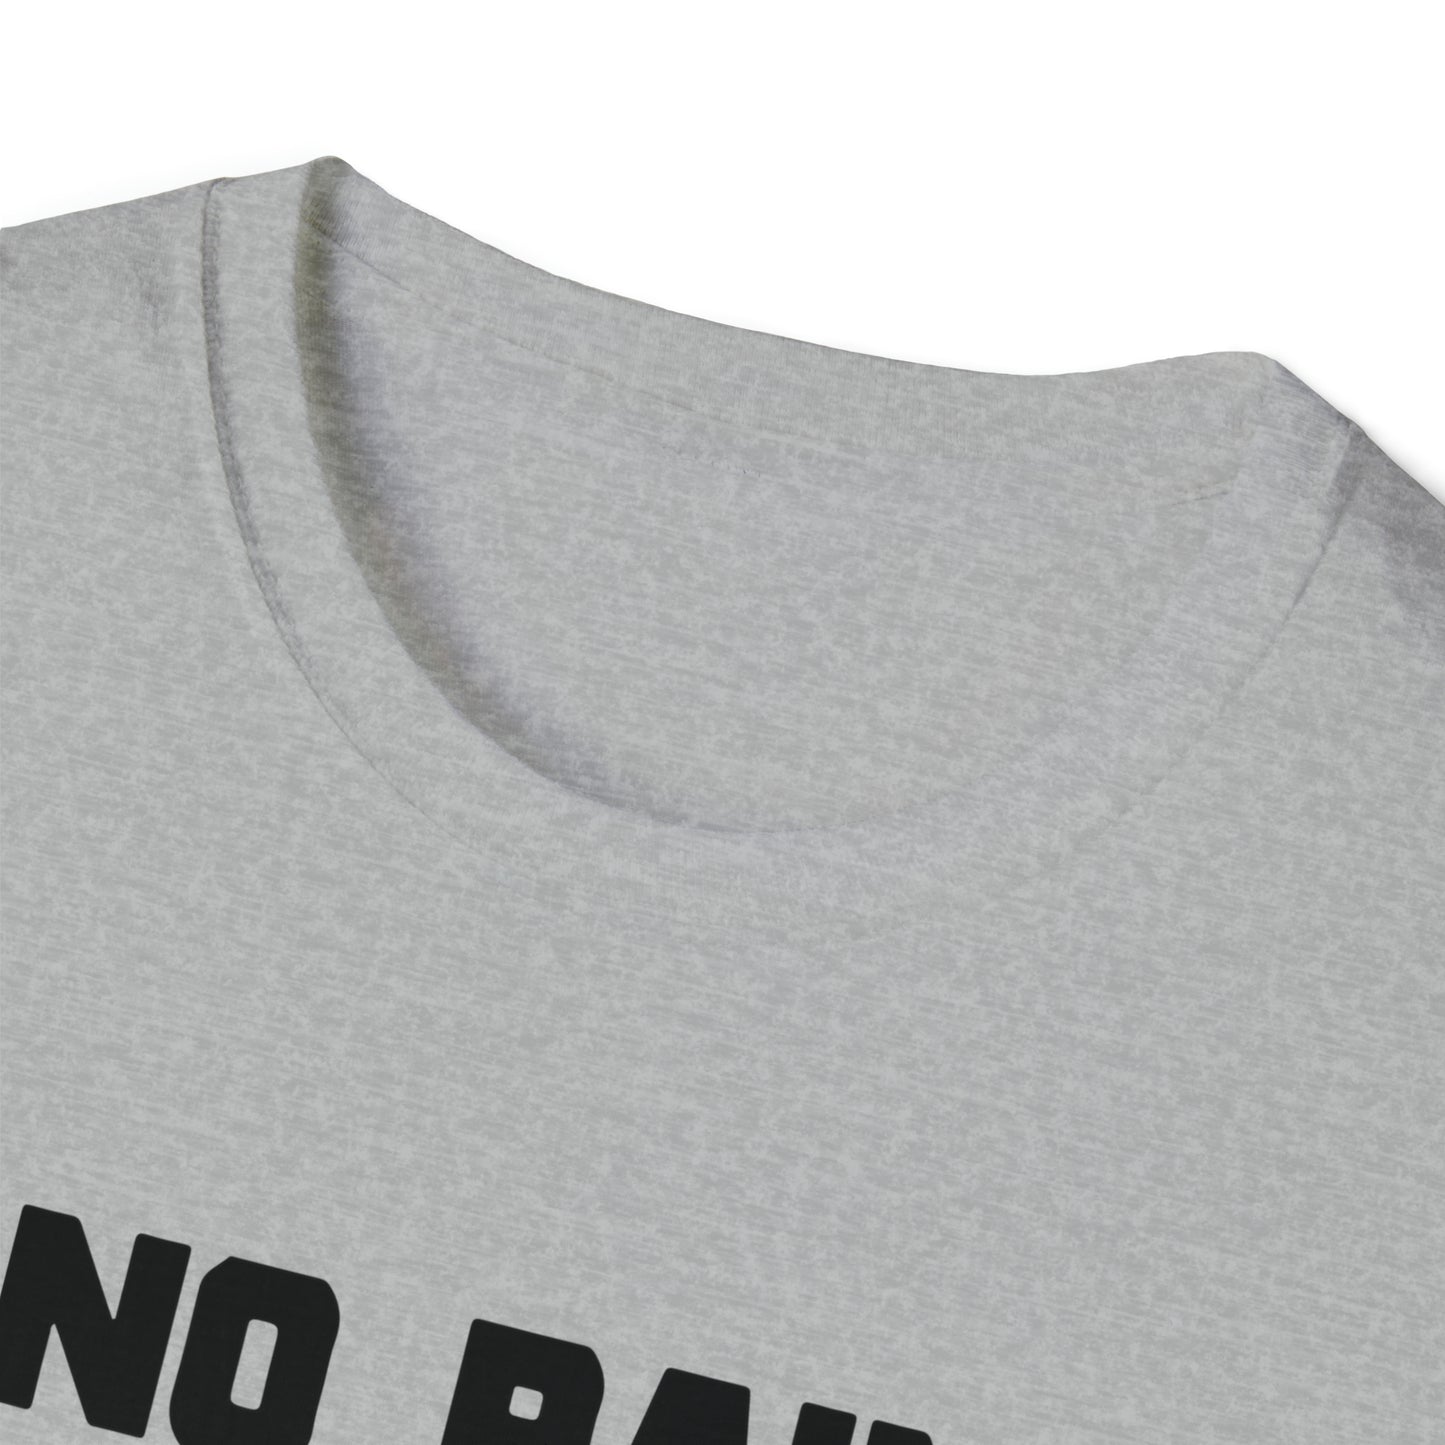 No Pain, No Gain - Softstyle T-Shirt